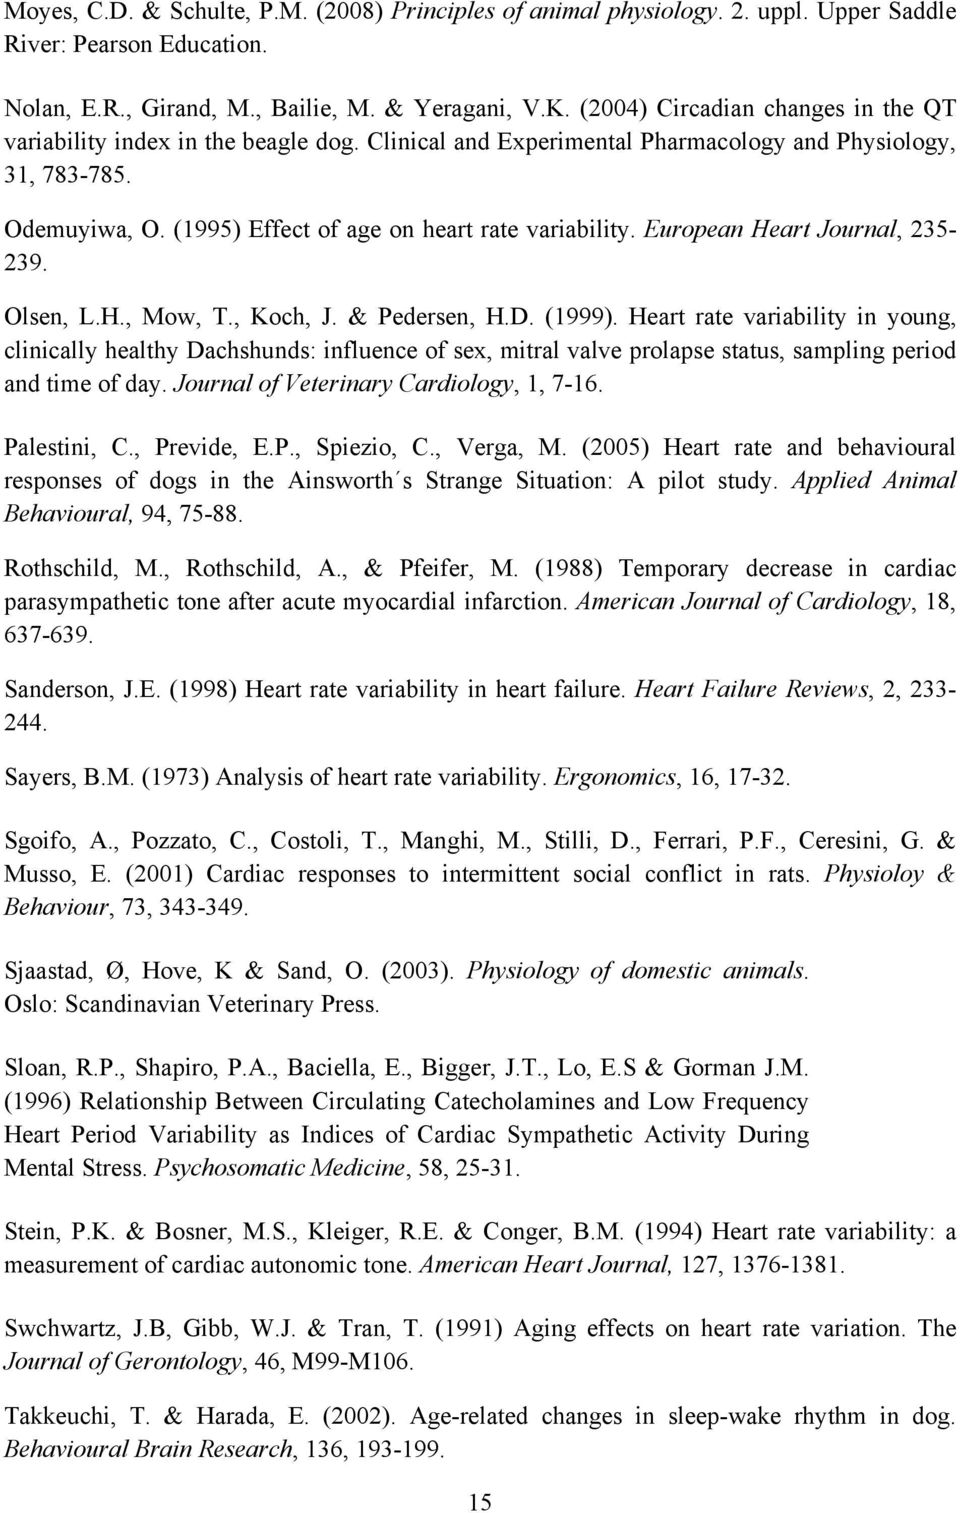 (1995) Effect of age on heart rate variability. European Heart Journal, 235-239. Olsen, L.H., Mow, T., Koch, J. & Pedersen, H.D. (1999).